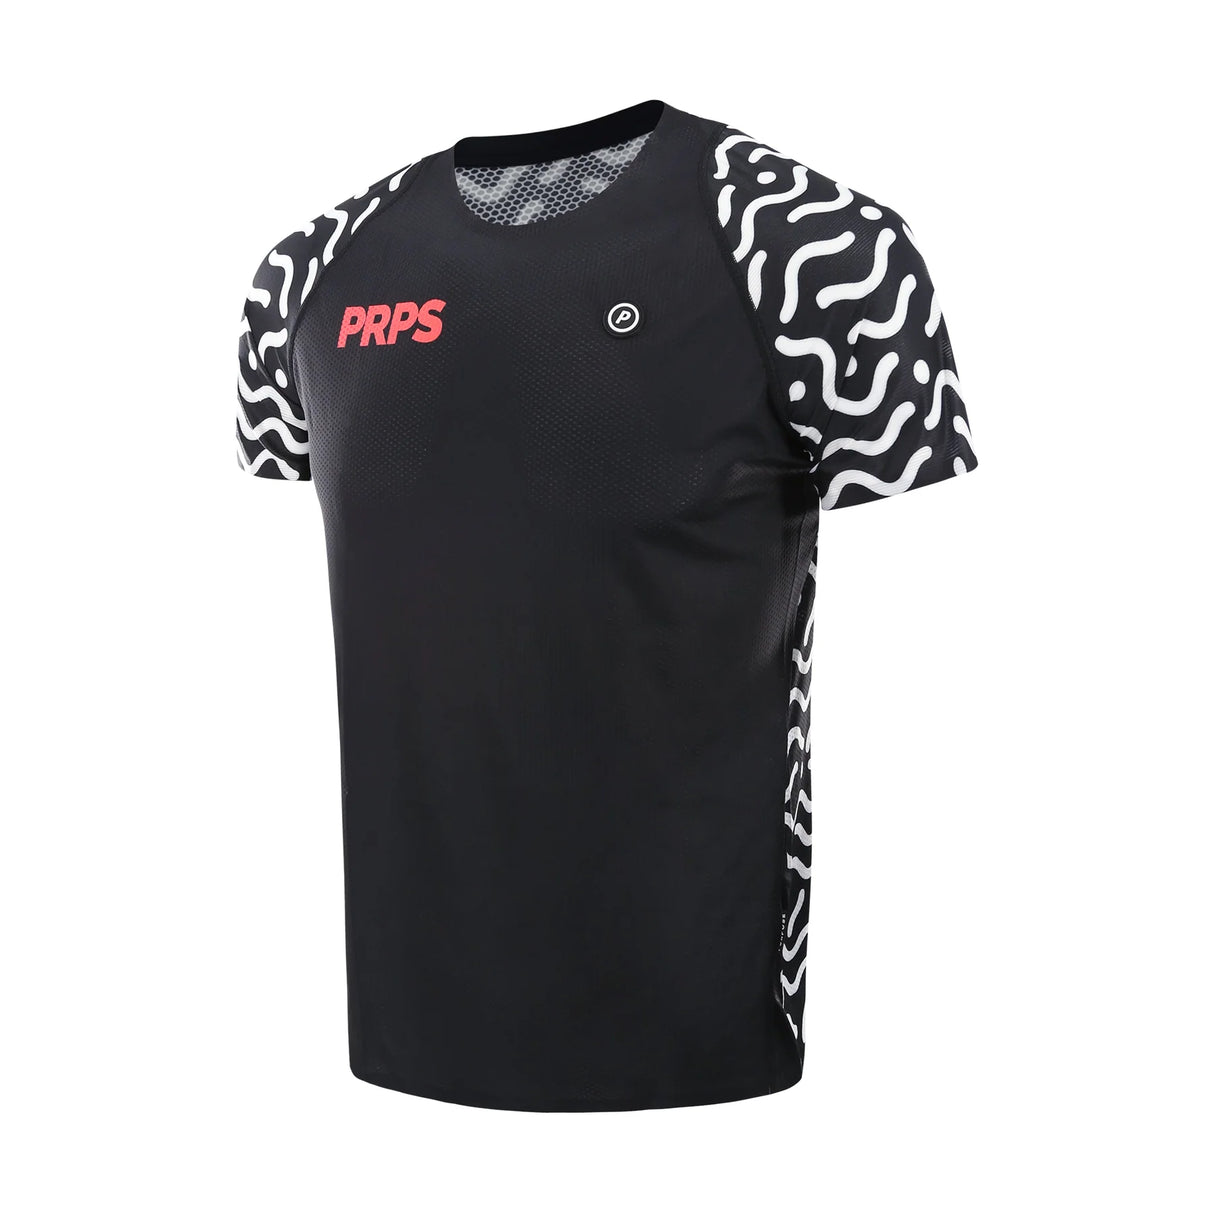 Purpose HYPERMESH Pro Running T-Shirt (Unisex)